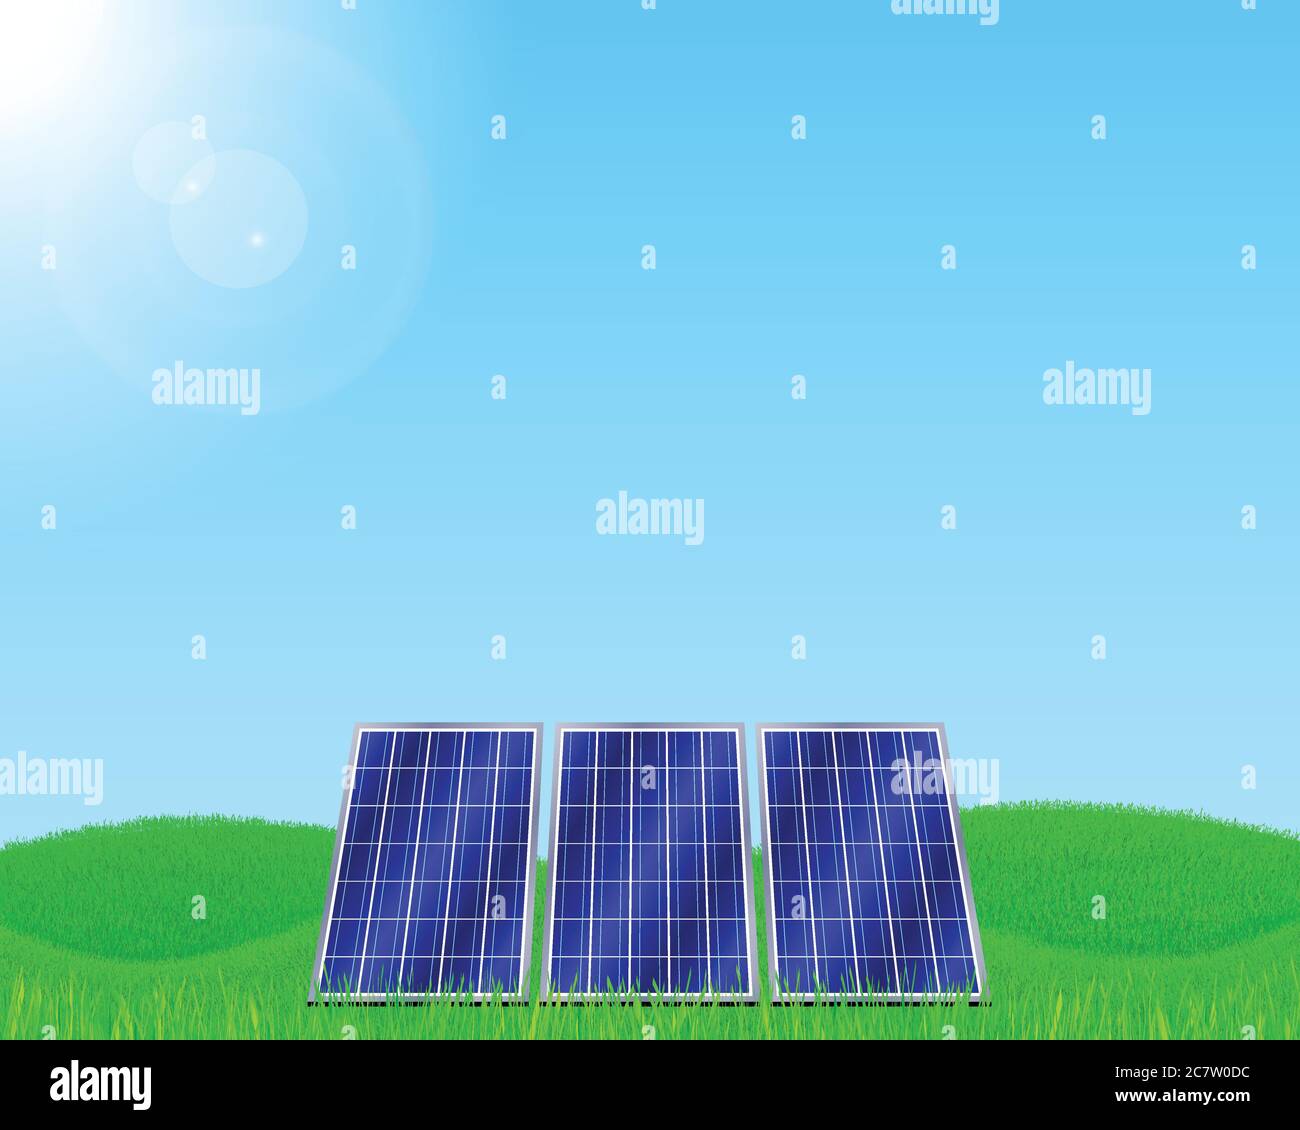 Solar panels on green grassy field, with sunshine. Stock Vector